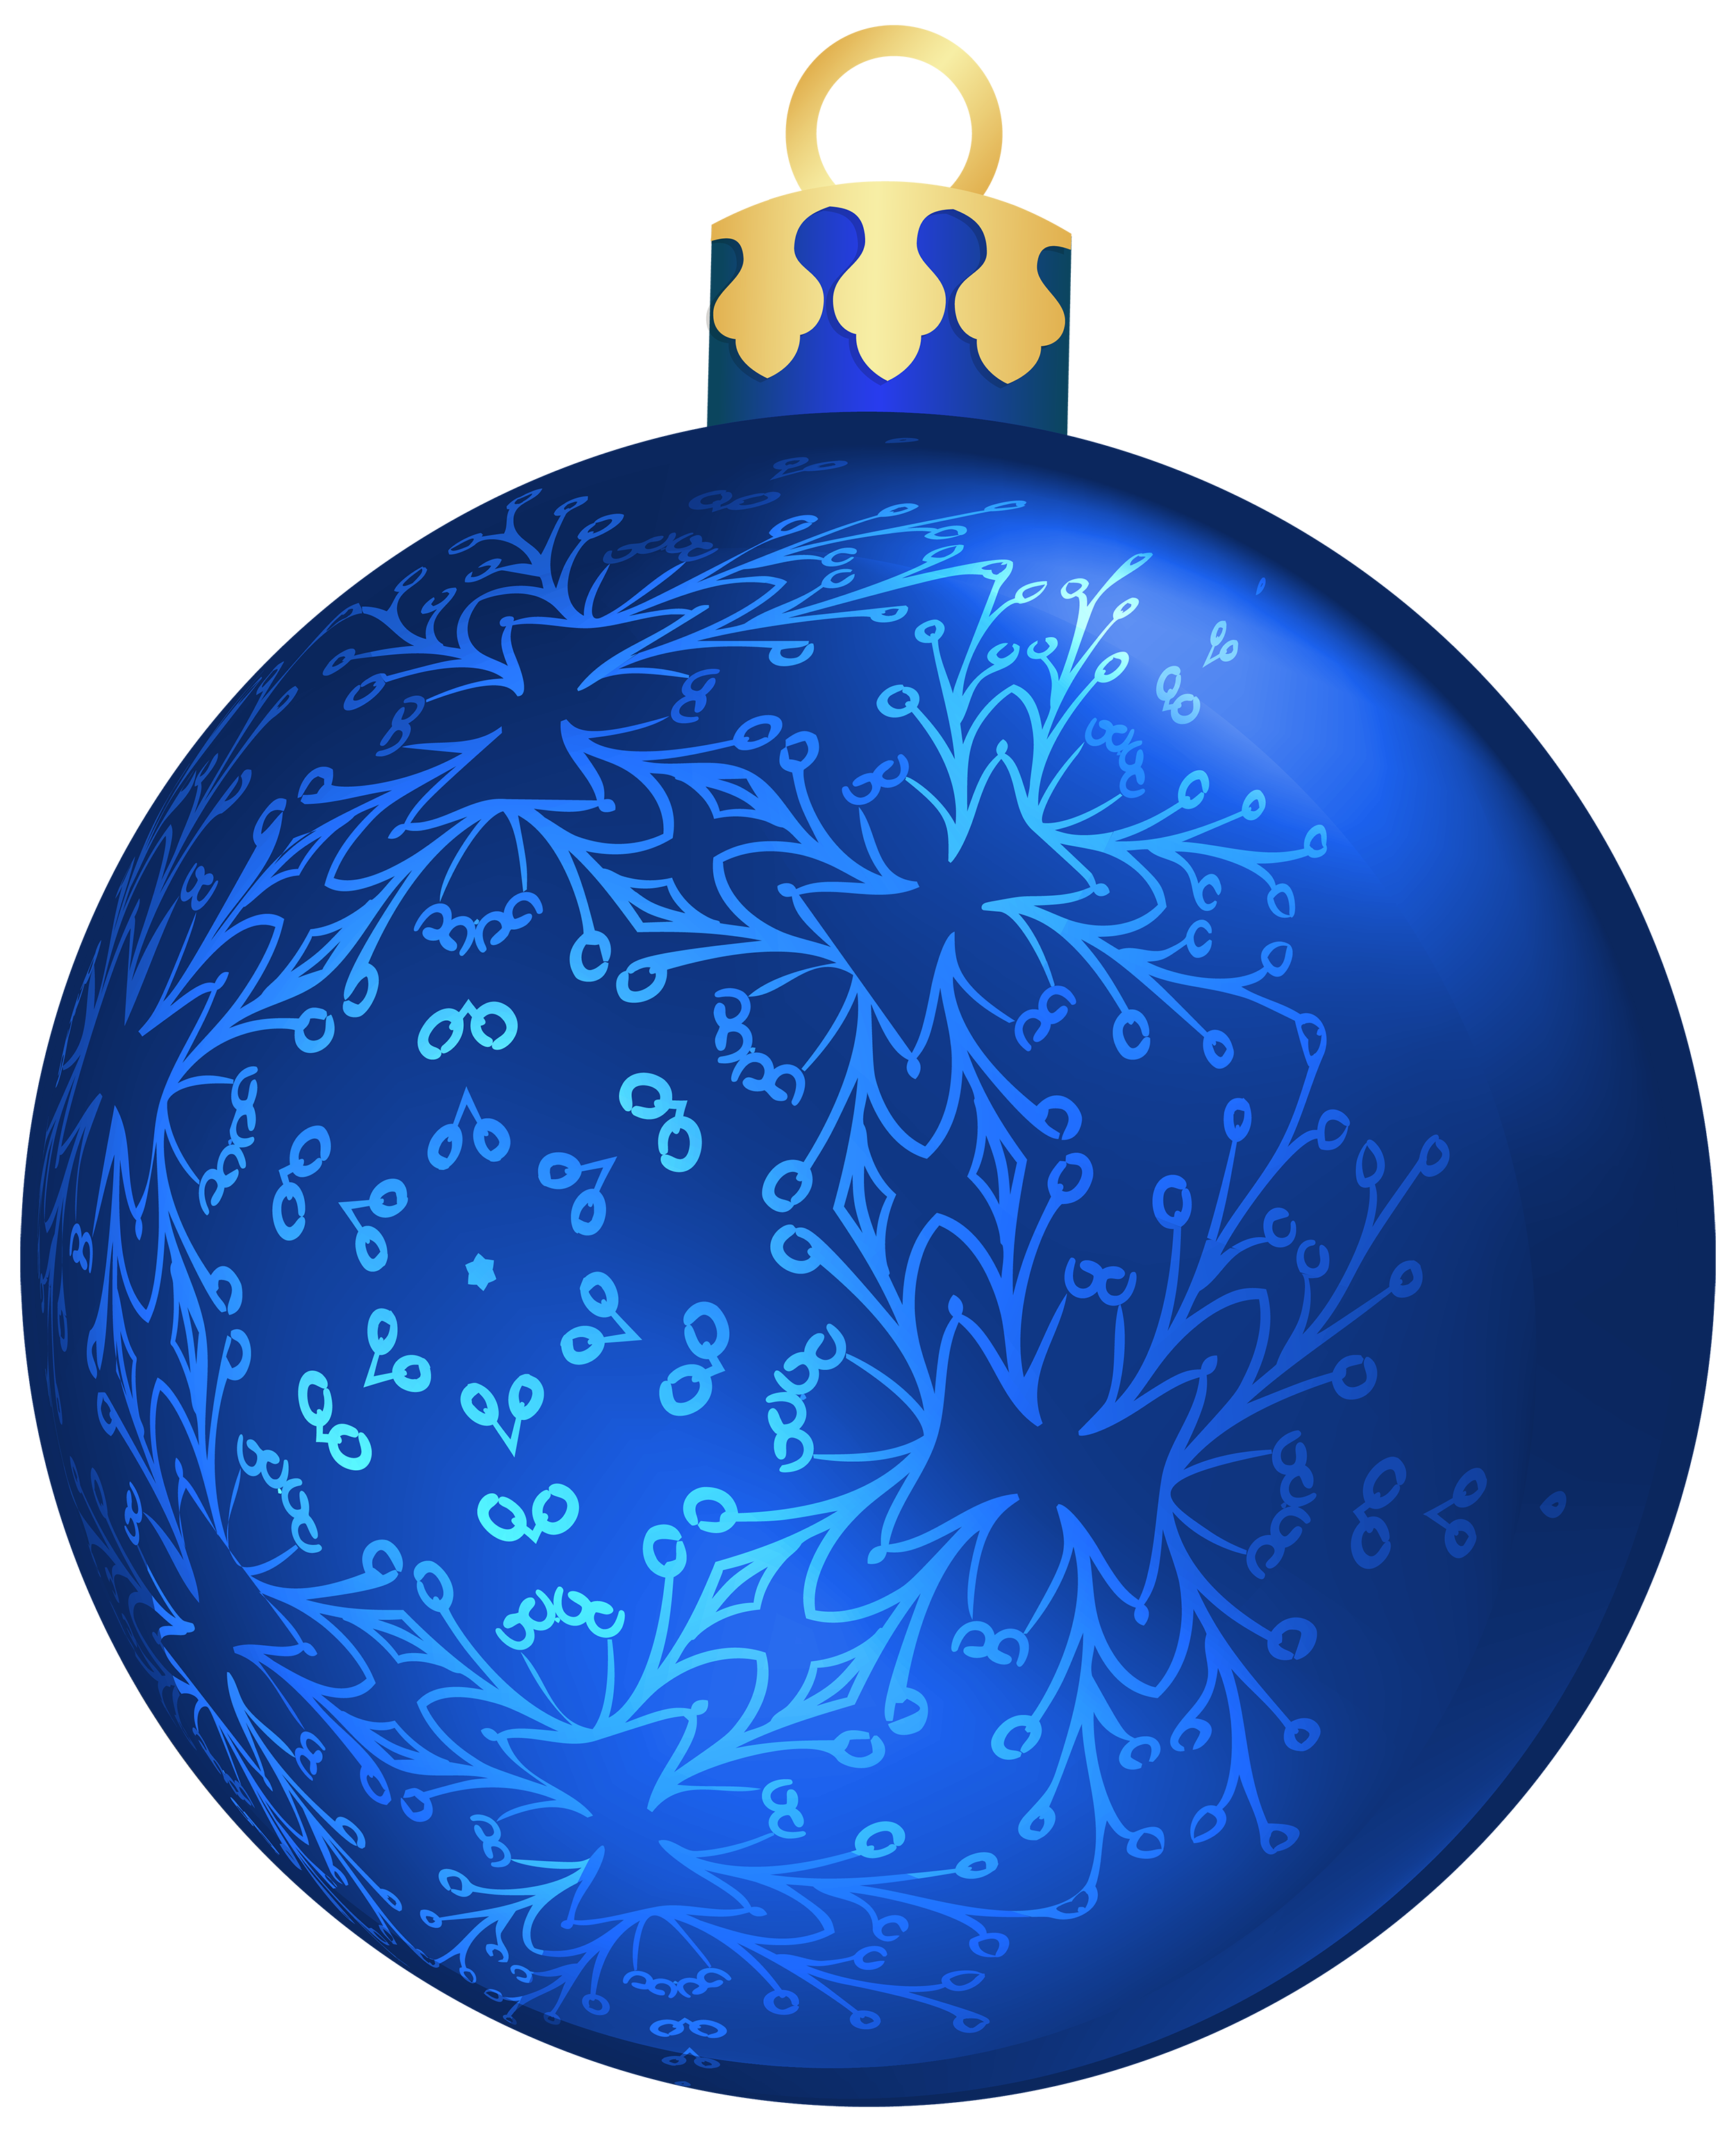 Blue Christmas Ball PNG Clipart - Best WEB Clipart